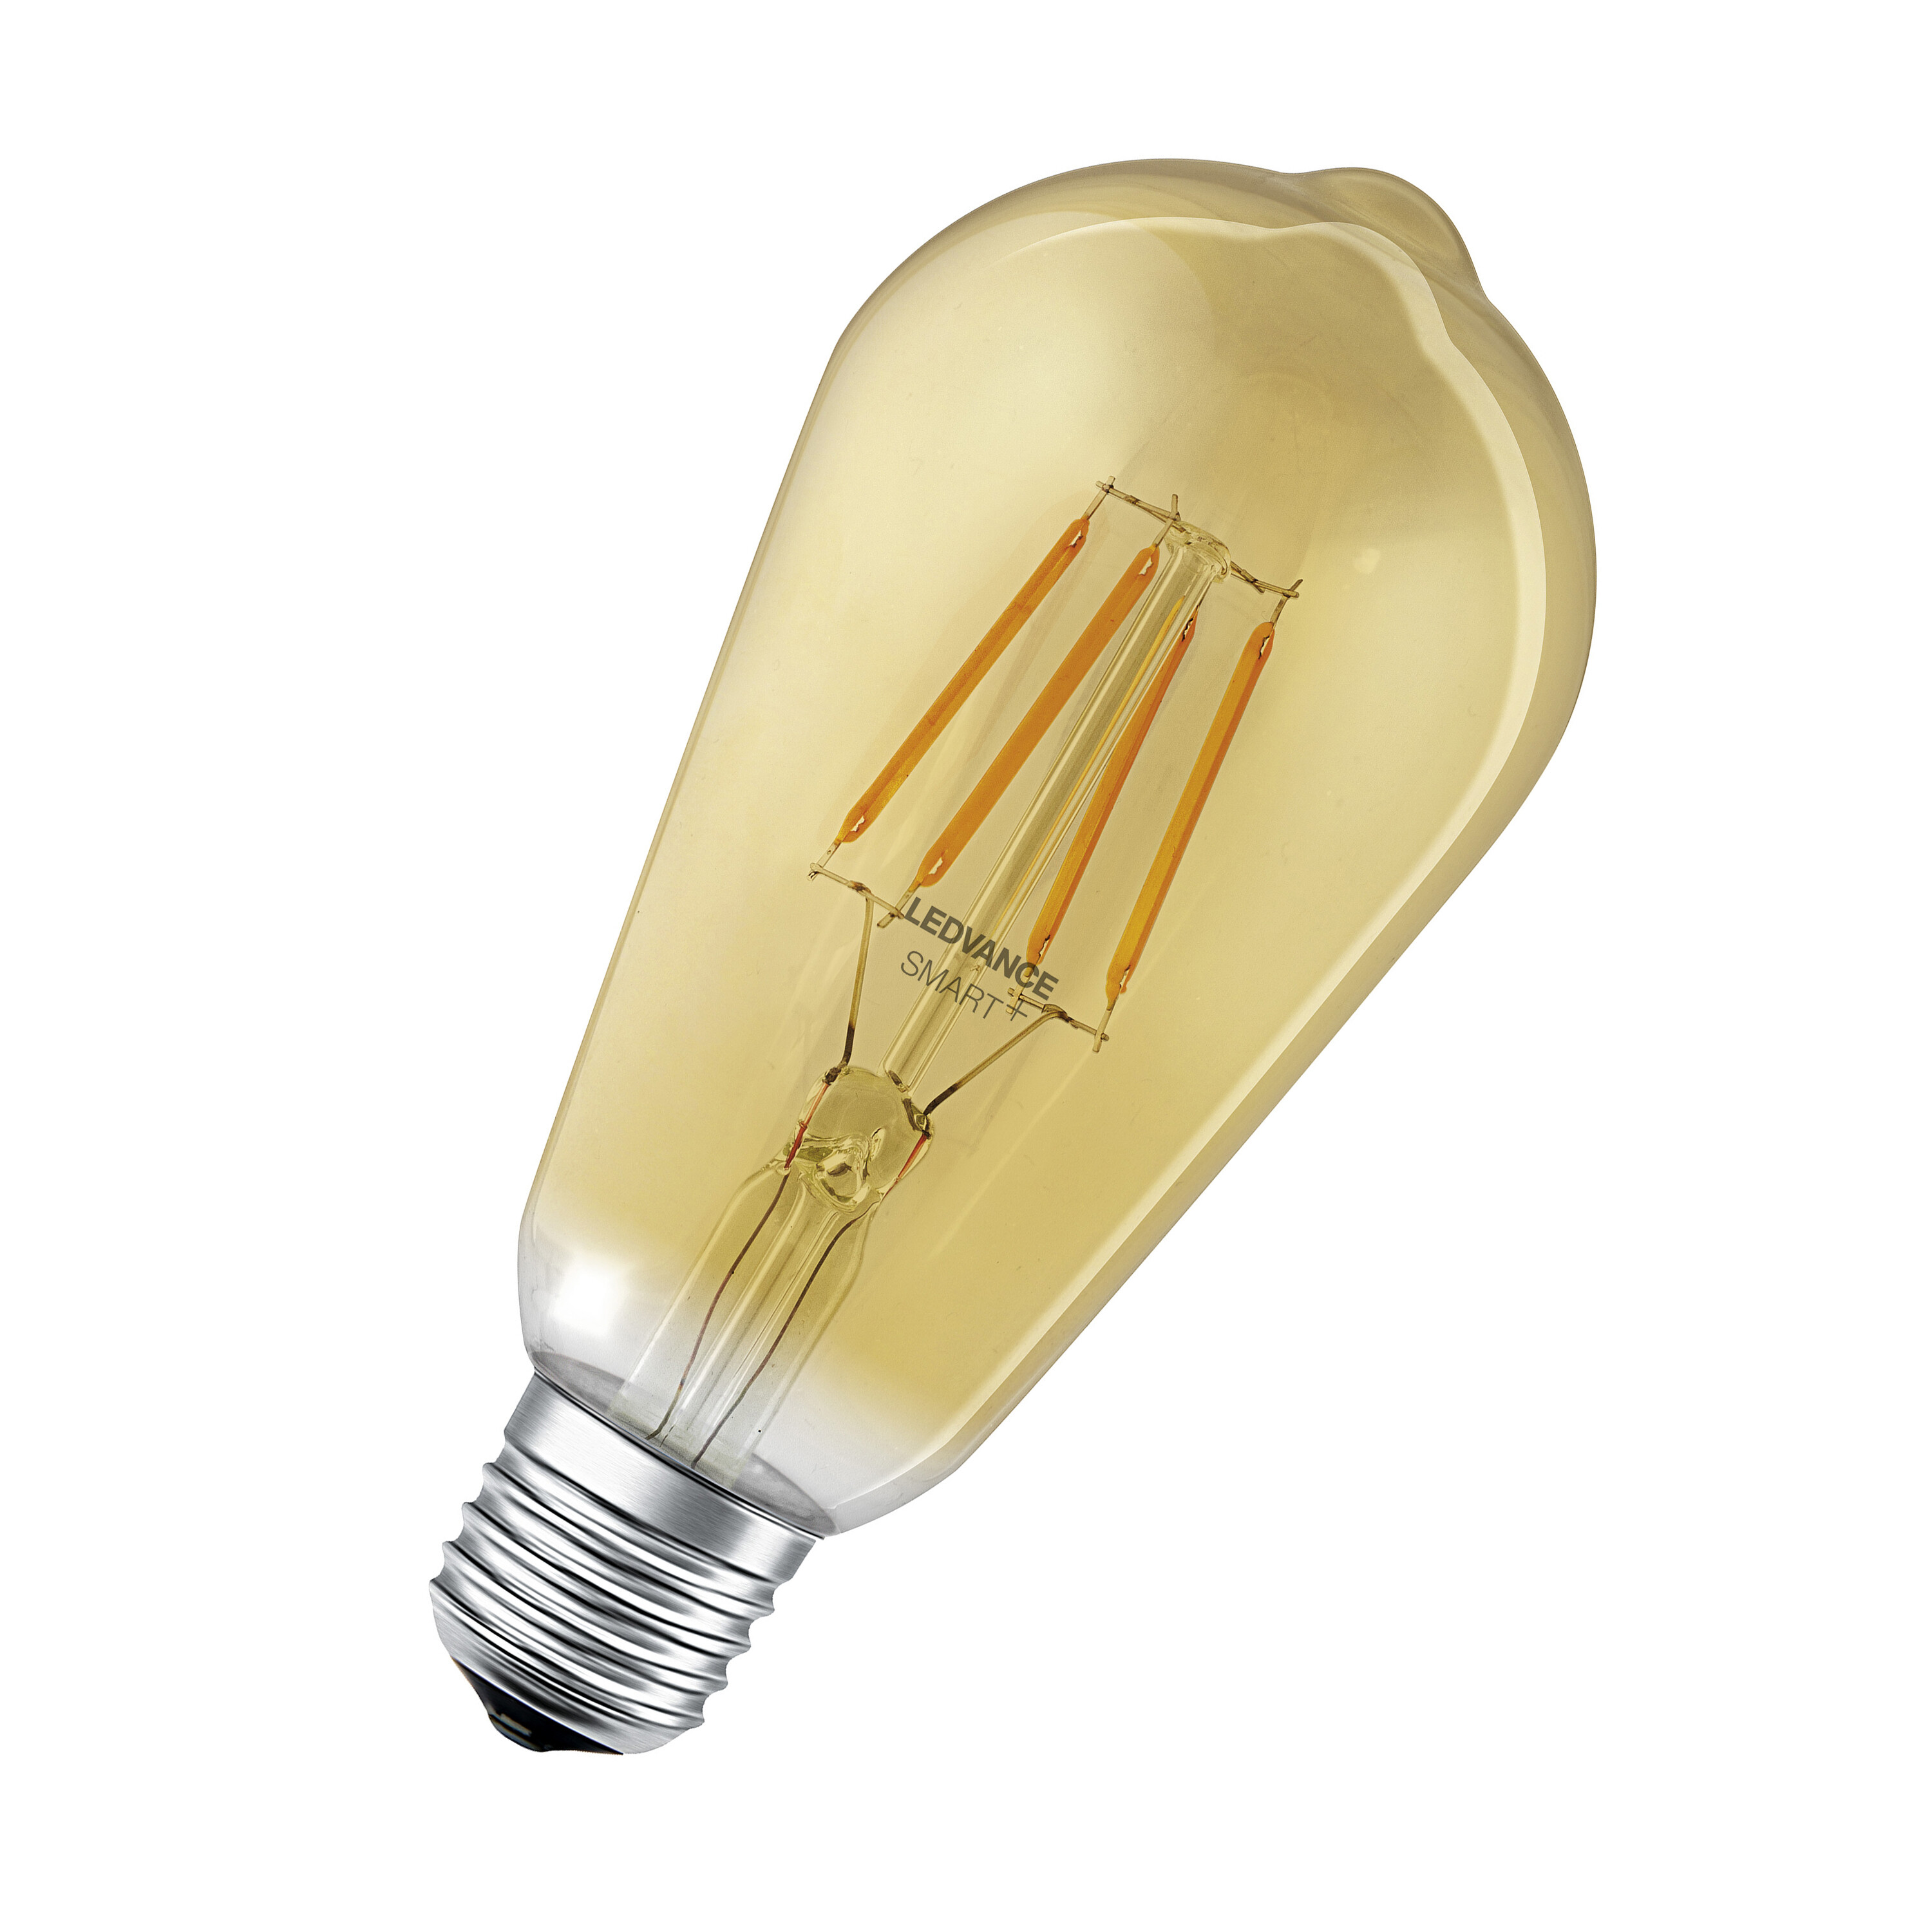 Lampe Dimmable Smarte SMART+ Filament WiFi Edison LED LEDVANCE Warmweiß